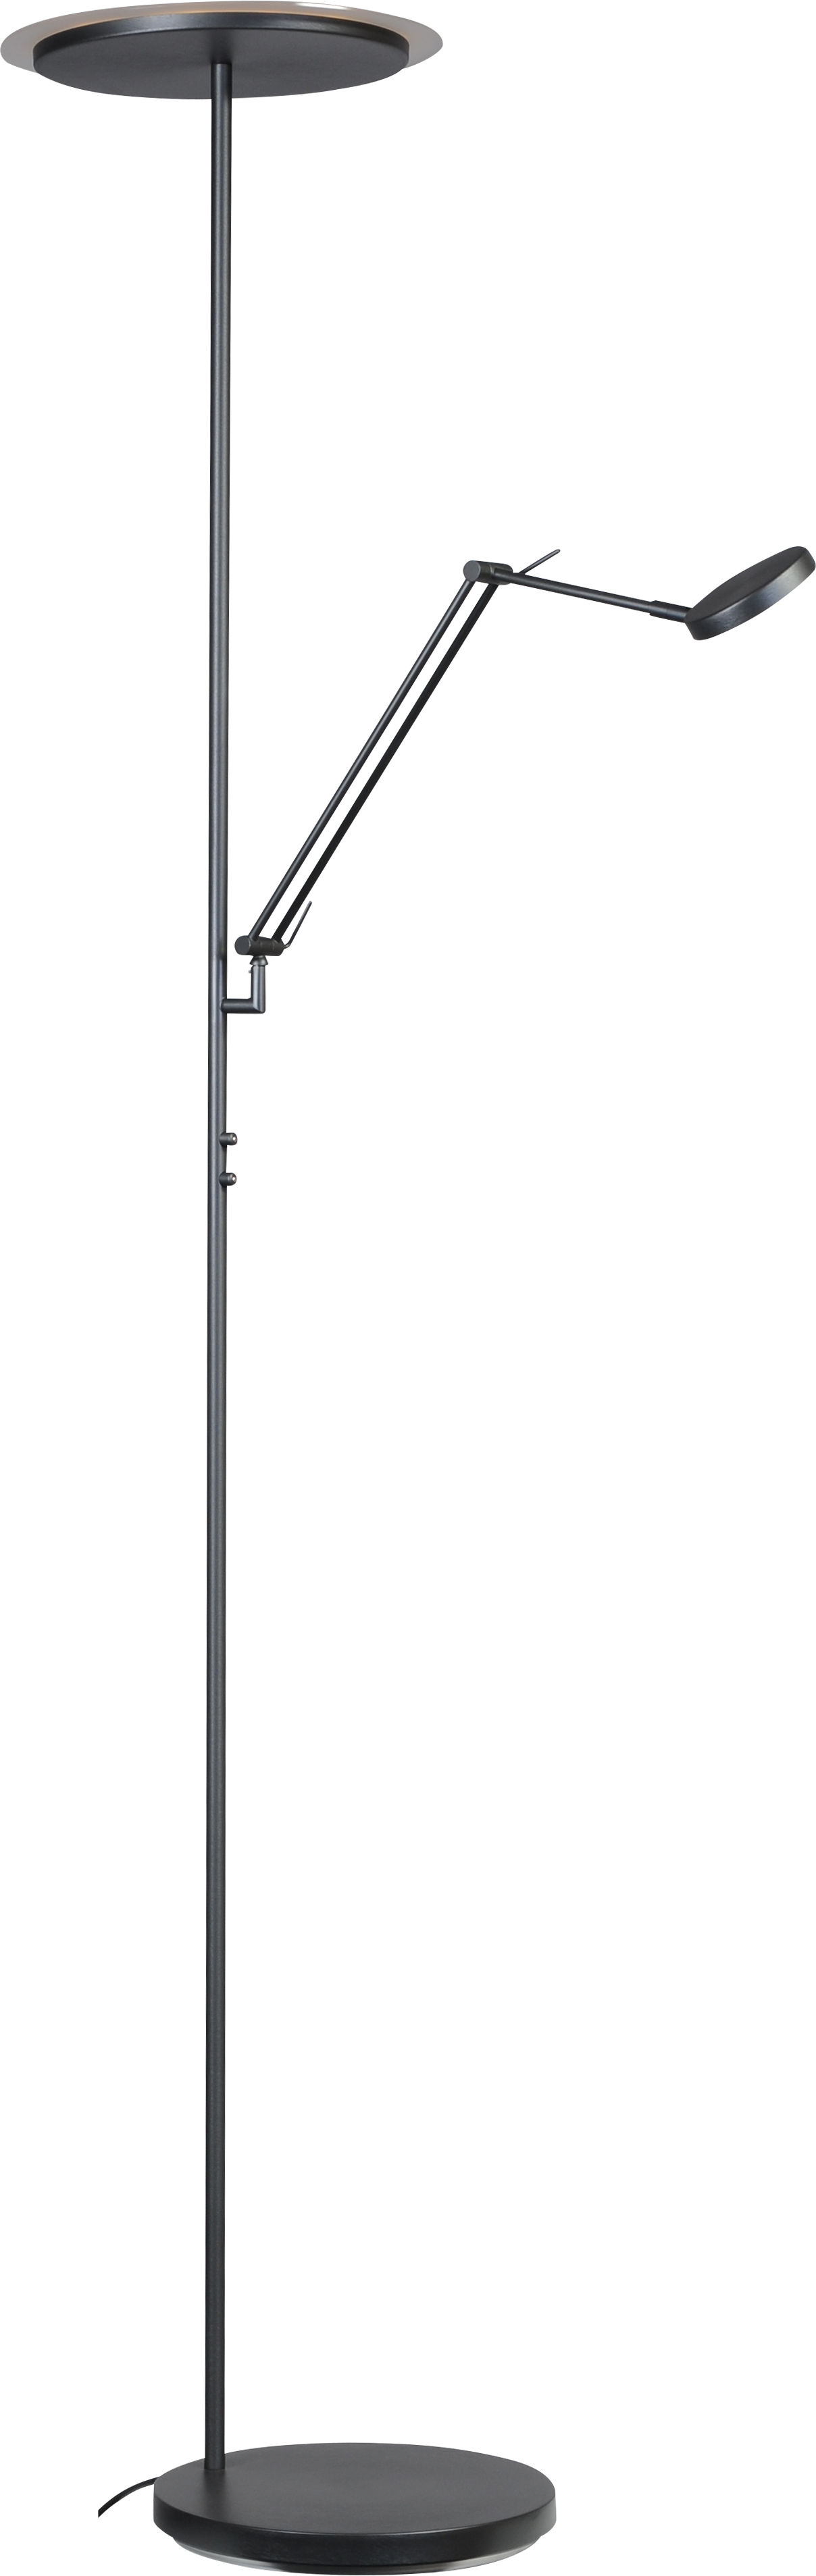 Zending Dosering Indica Moderne vloerlamp met leeslamp Masterlight Milan 1361-81-10-DW